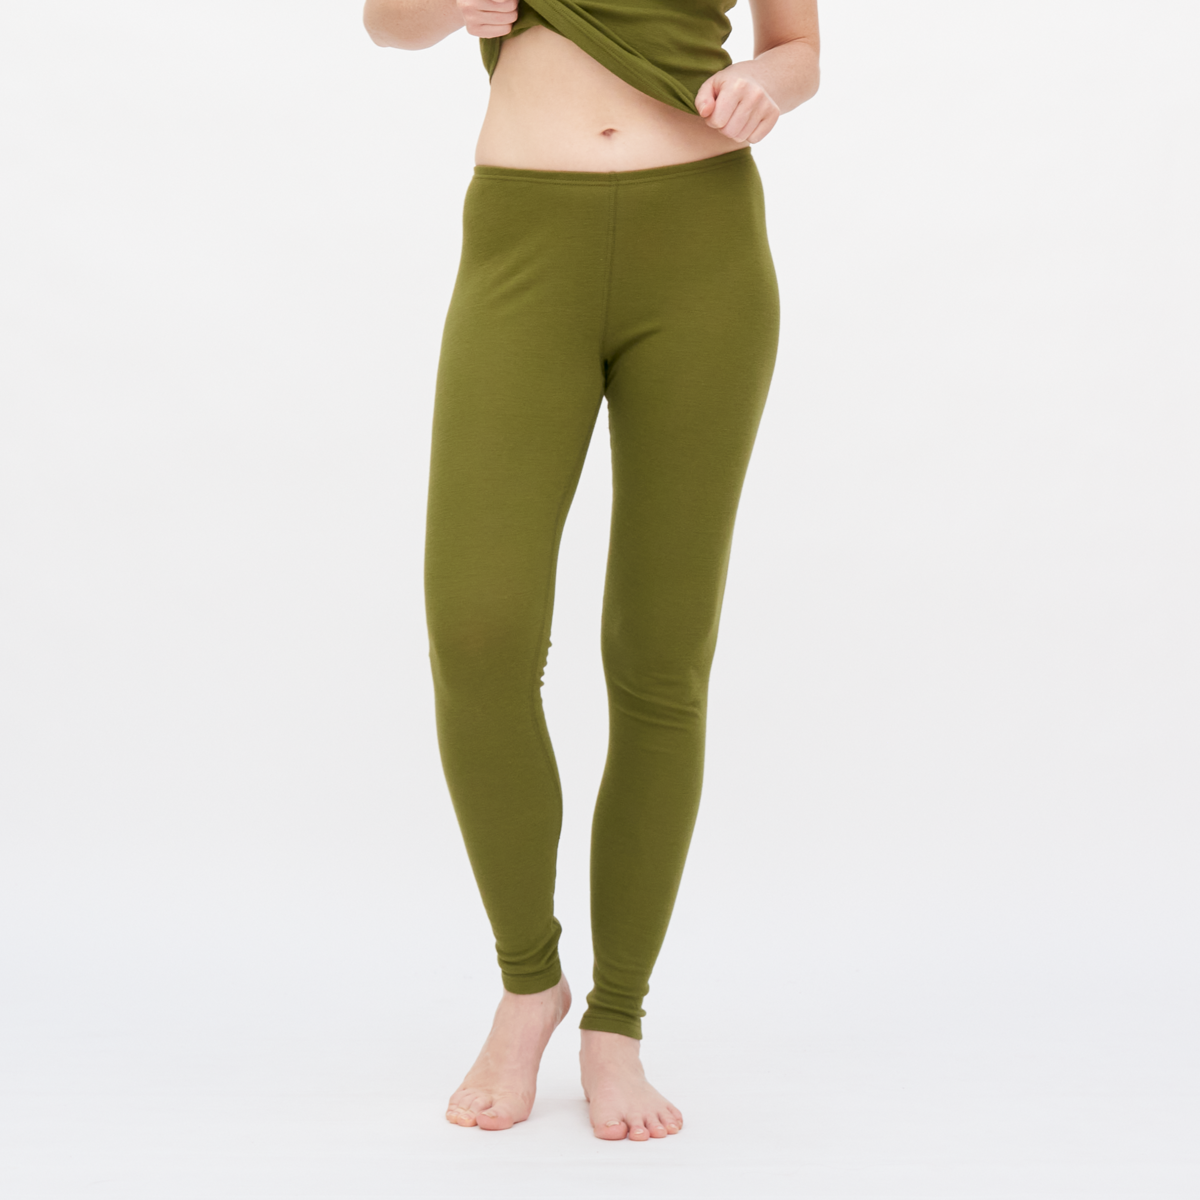 Grün Damen Lange Unterhose